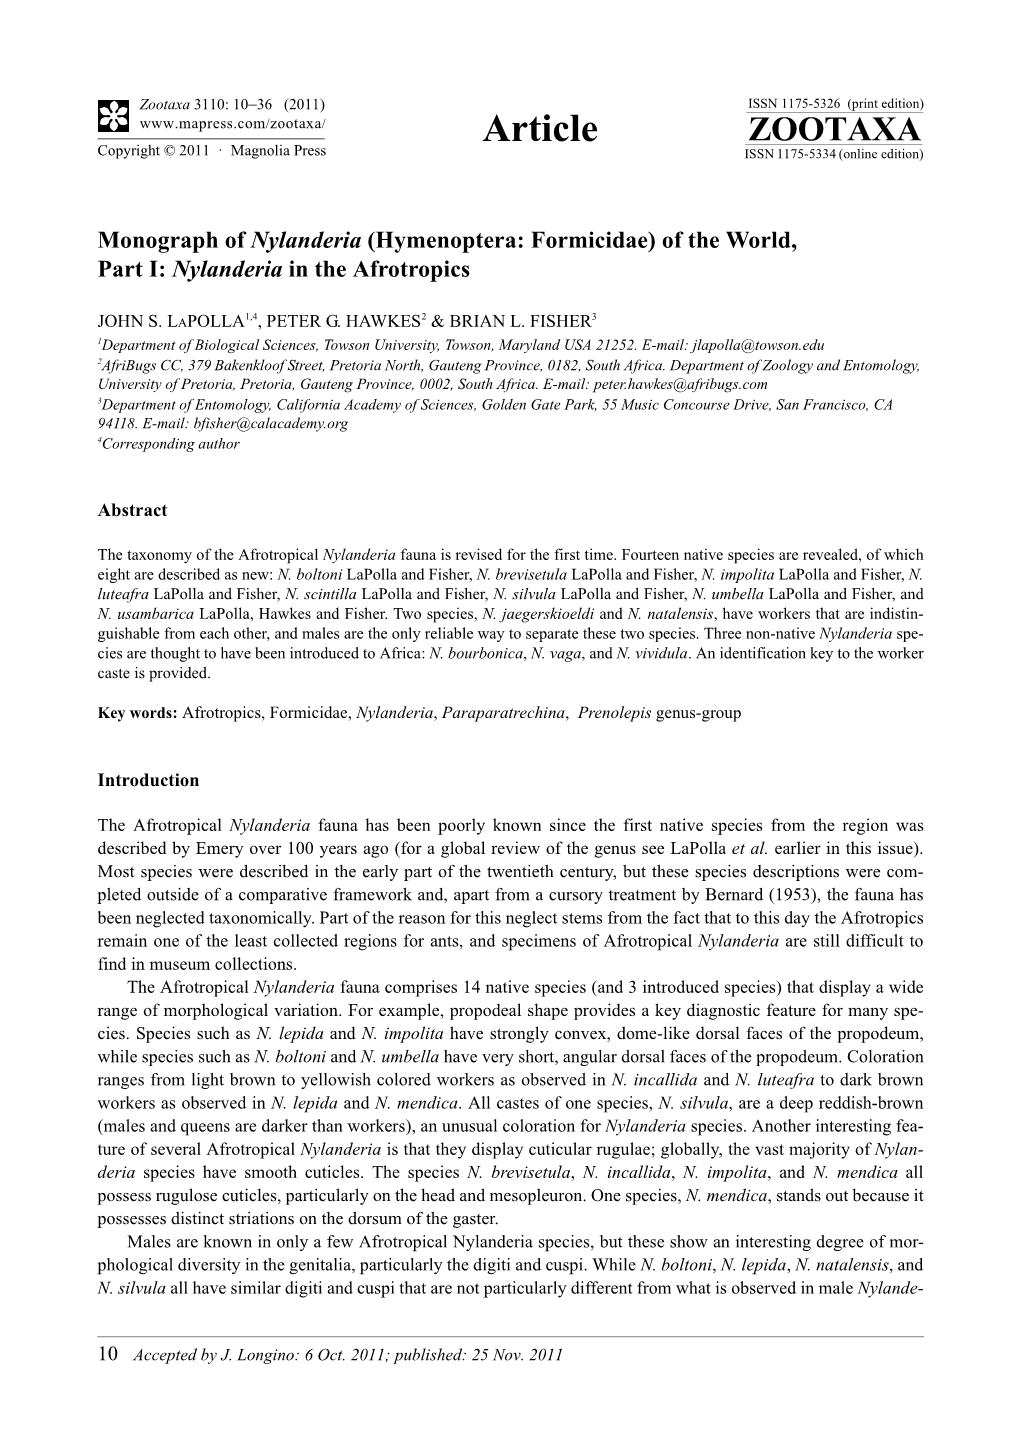 Monograph of Nylanderia (Hymenoptera: Formicidae) of the World, Part I: Nylanderia in the Afrotropics